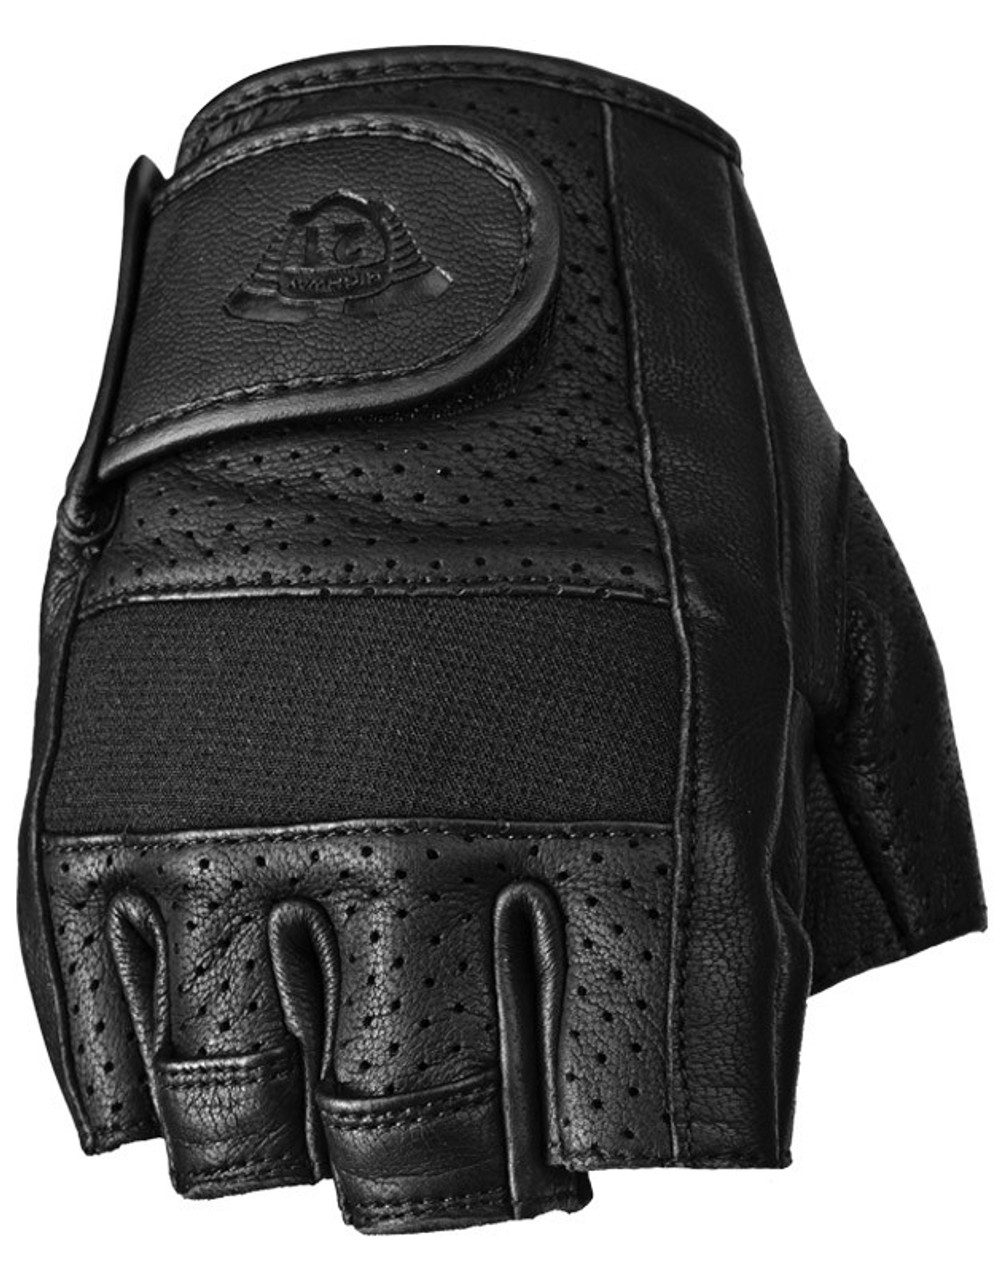 Highway 21 #5884 489-0018~7 - Half Jab Perforated Gloves Black 3x